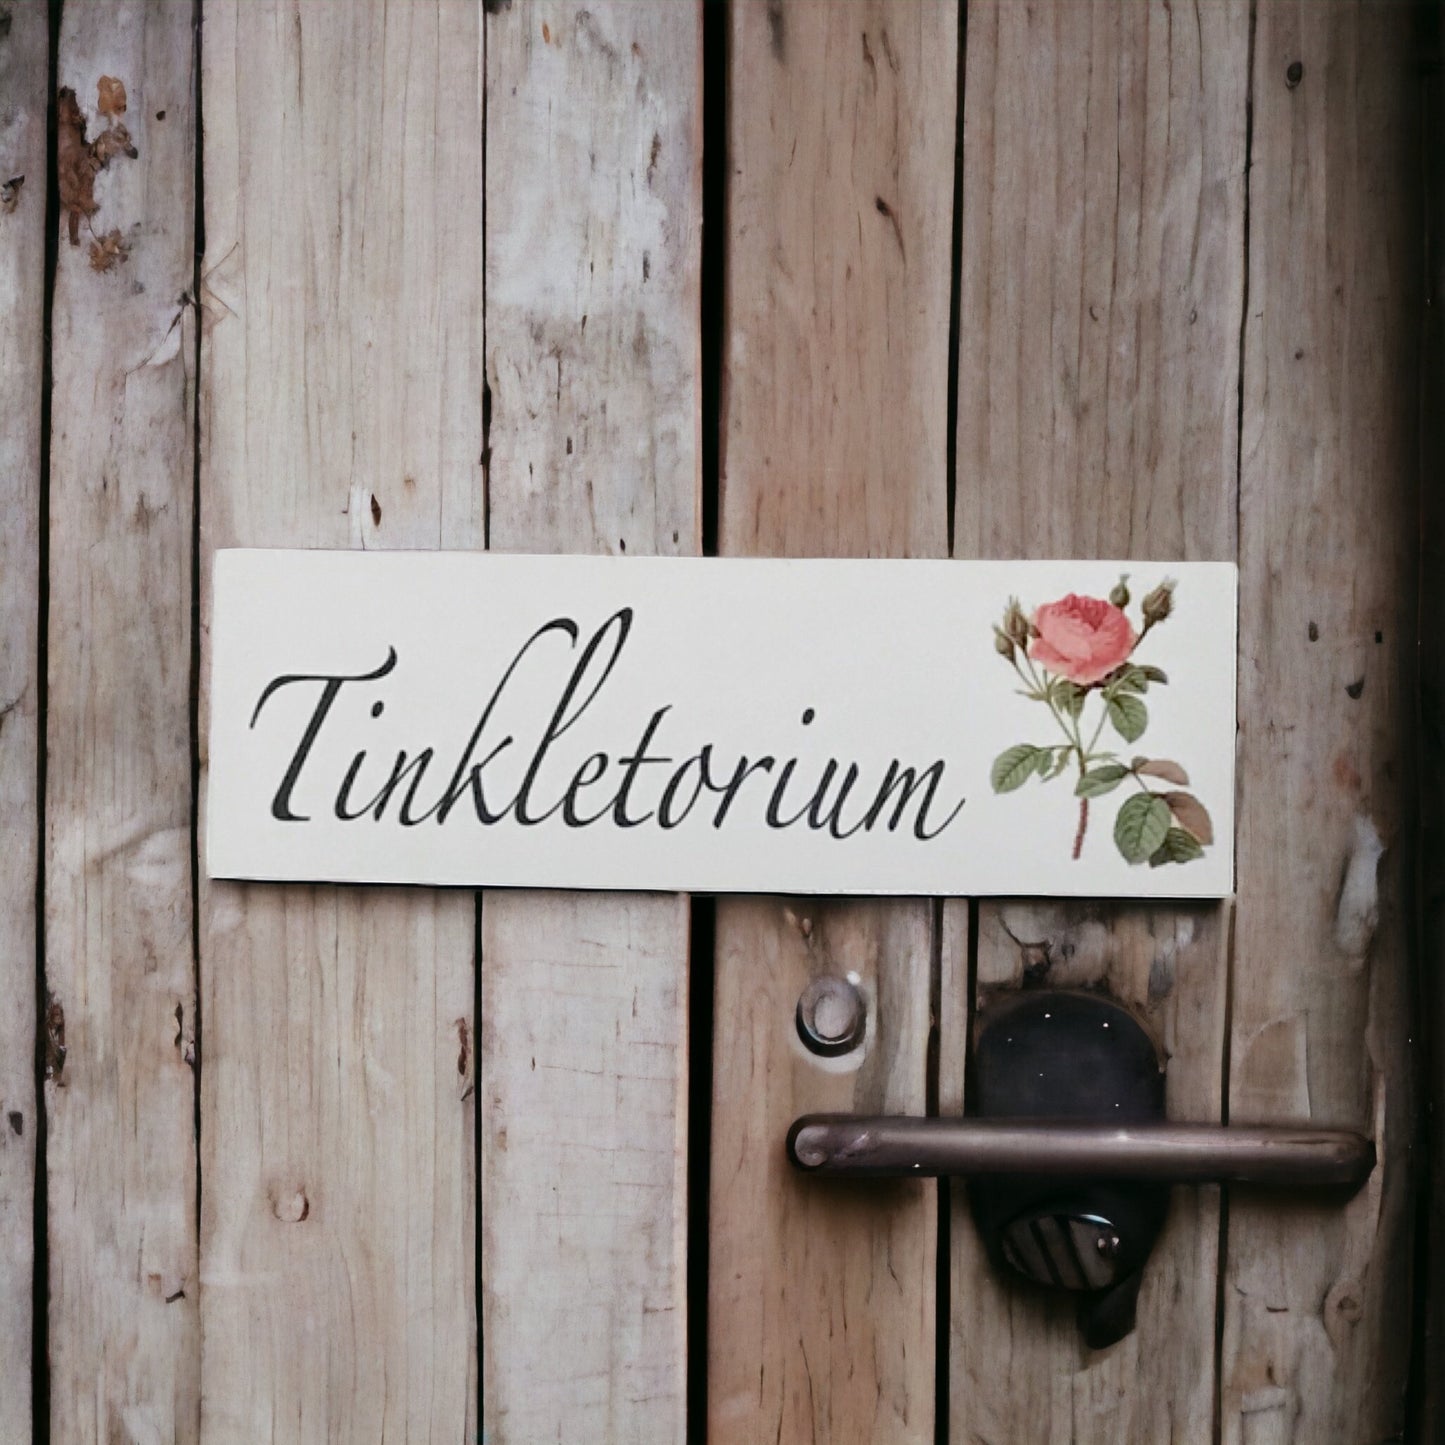 Toilet Tinkletorium Rose Door Sign - The Renmy Store Homewares & Gifts 